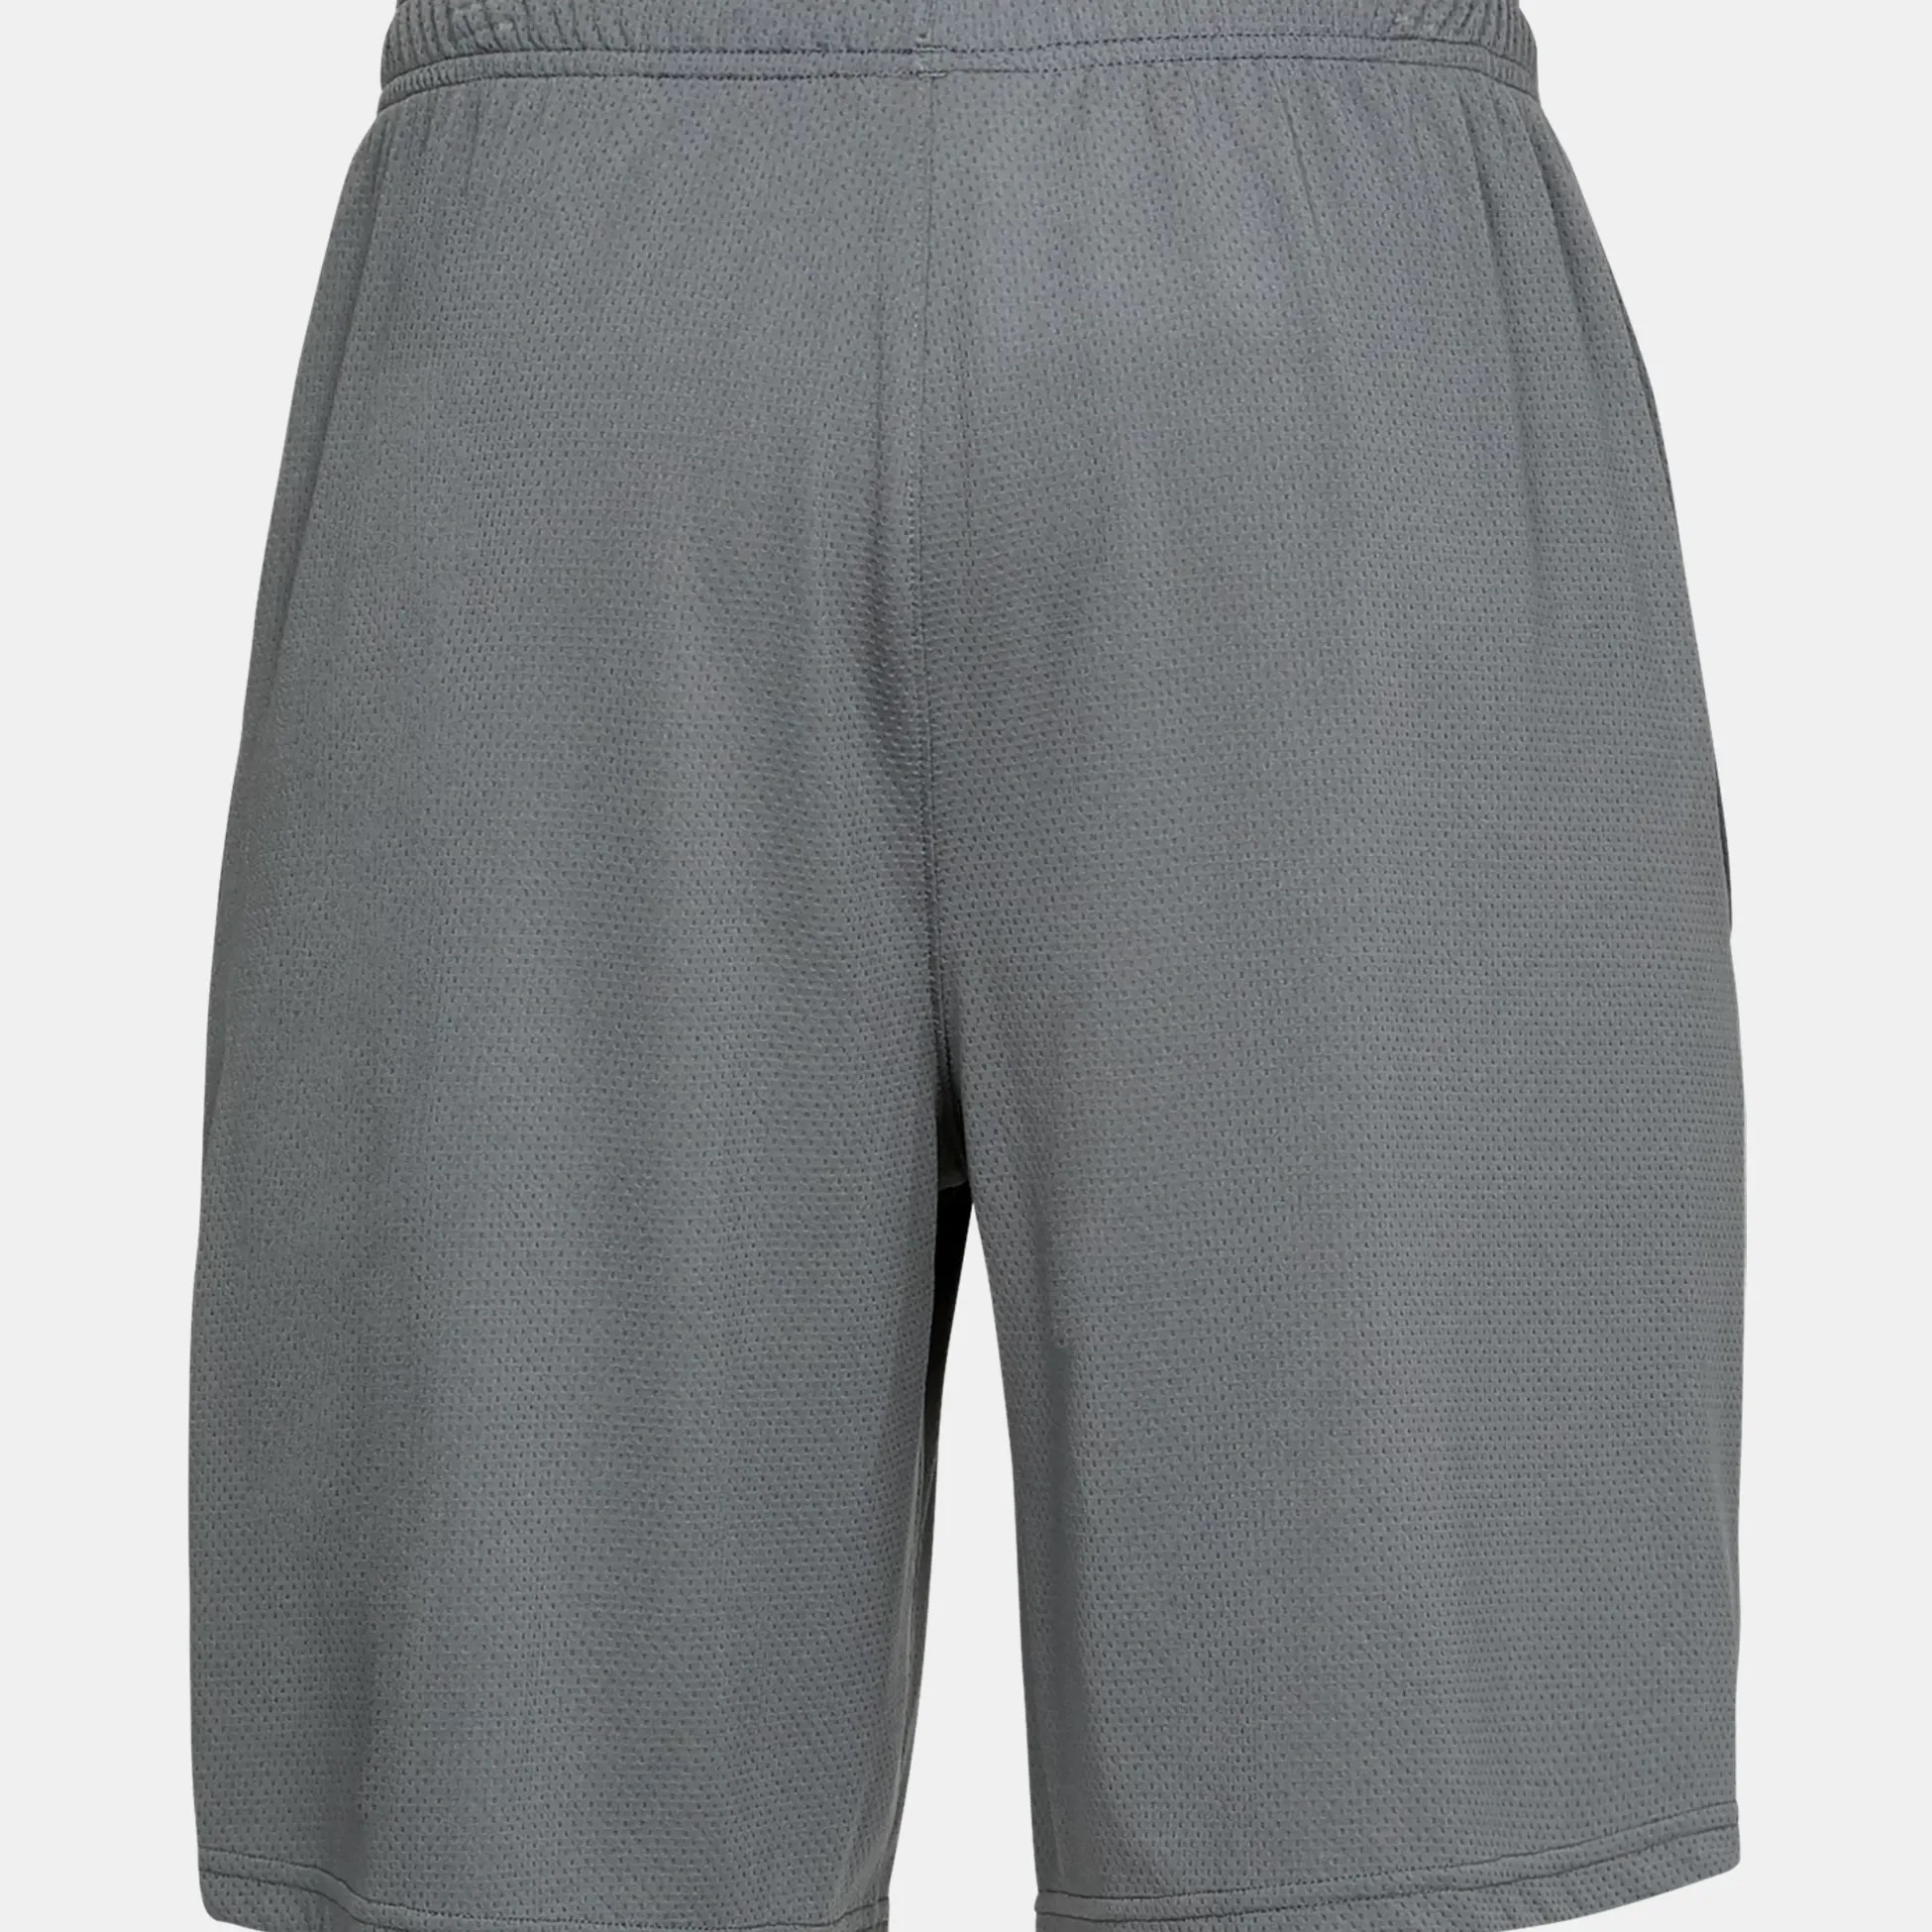 Shorts -  under armour UA Tech Mesh Shorts 8705